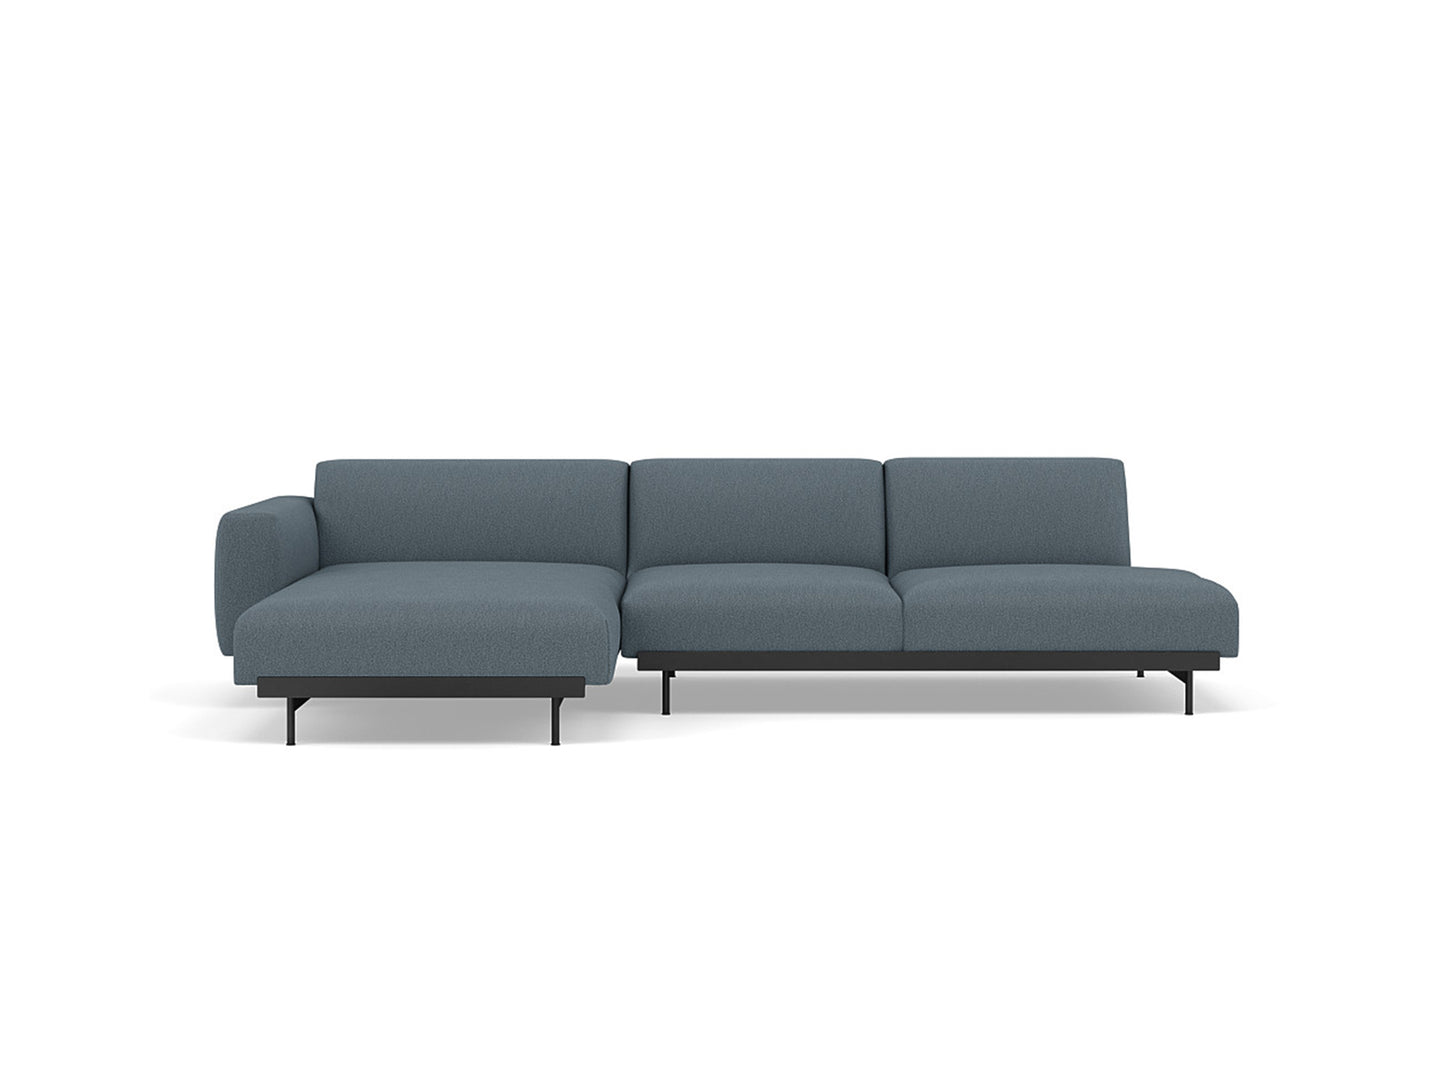 In Situ 3-Seater Modular Sofa by Muuto - Configuration 9 / Clay 1